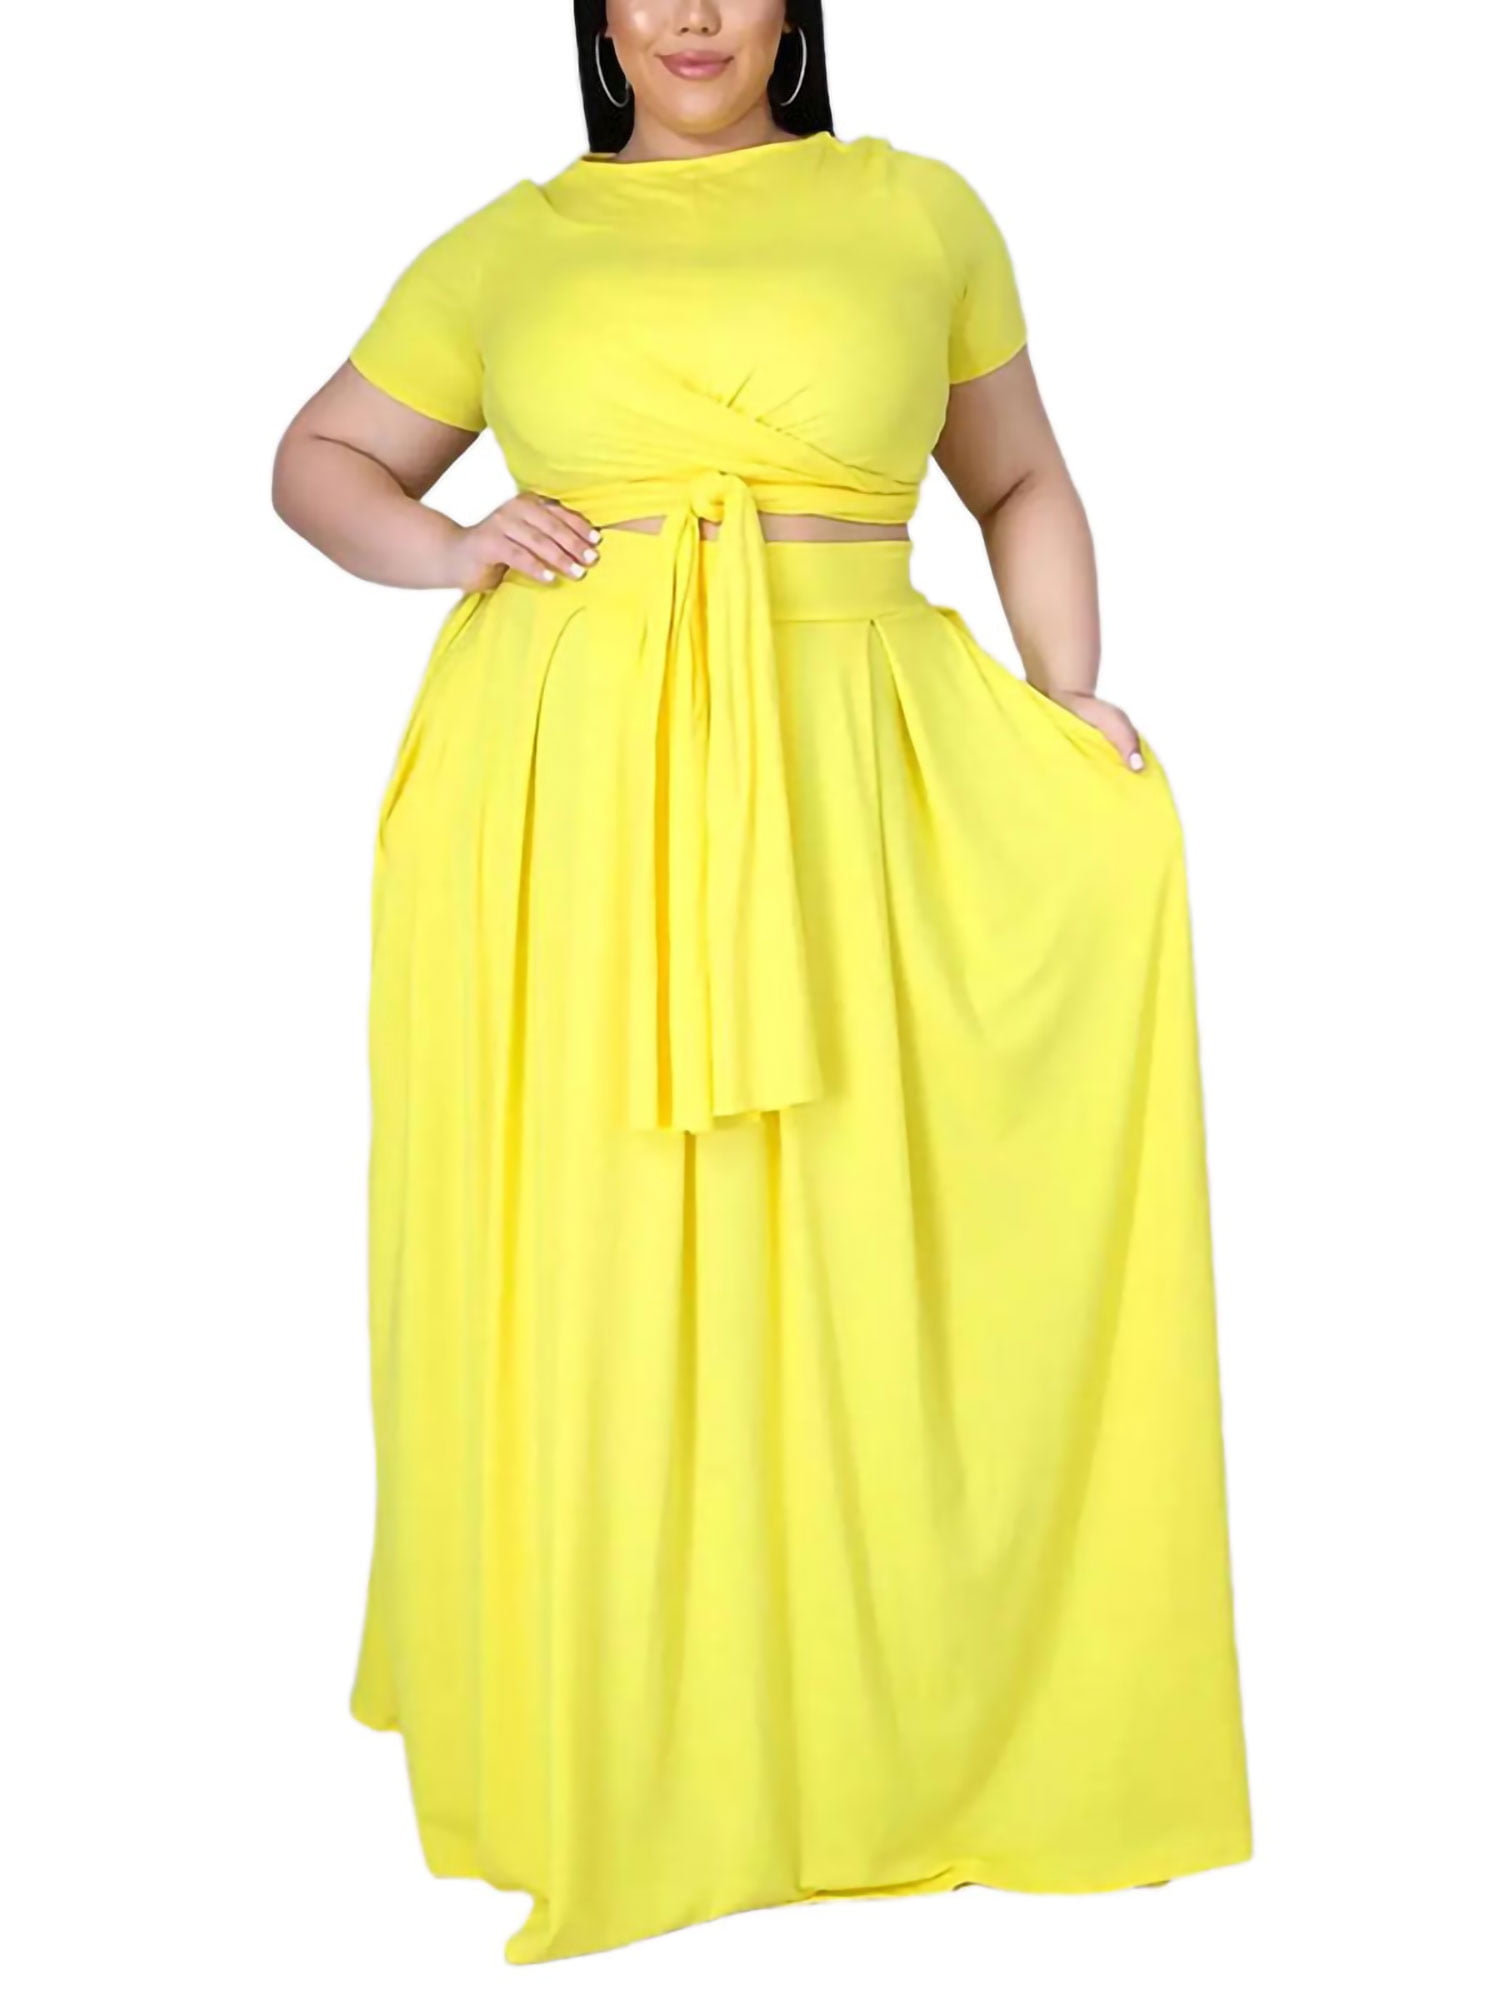 Torrid 2 Piece maxi skirt set  Plus size dresses, Plus size fashion,  Fashion